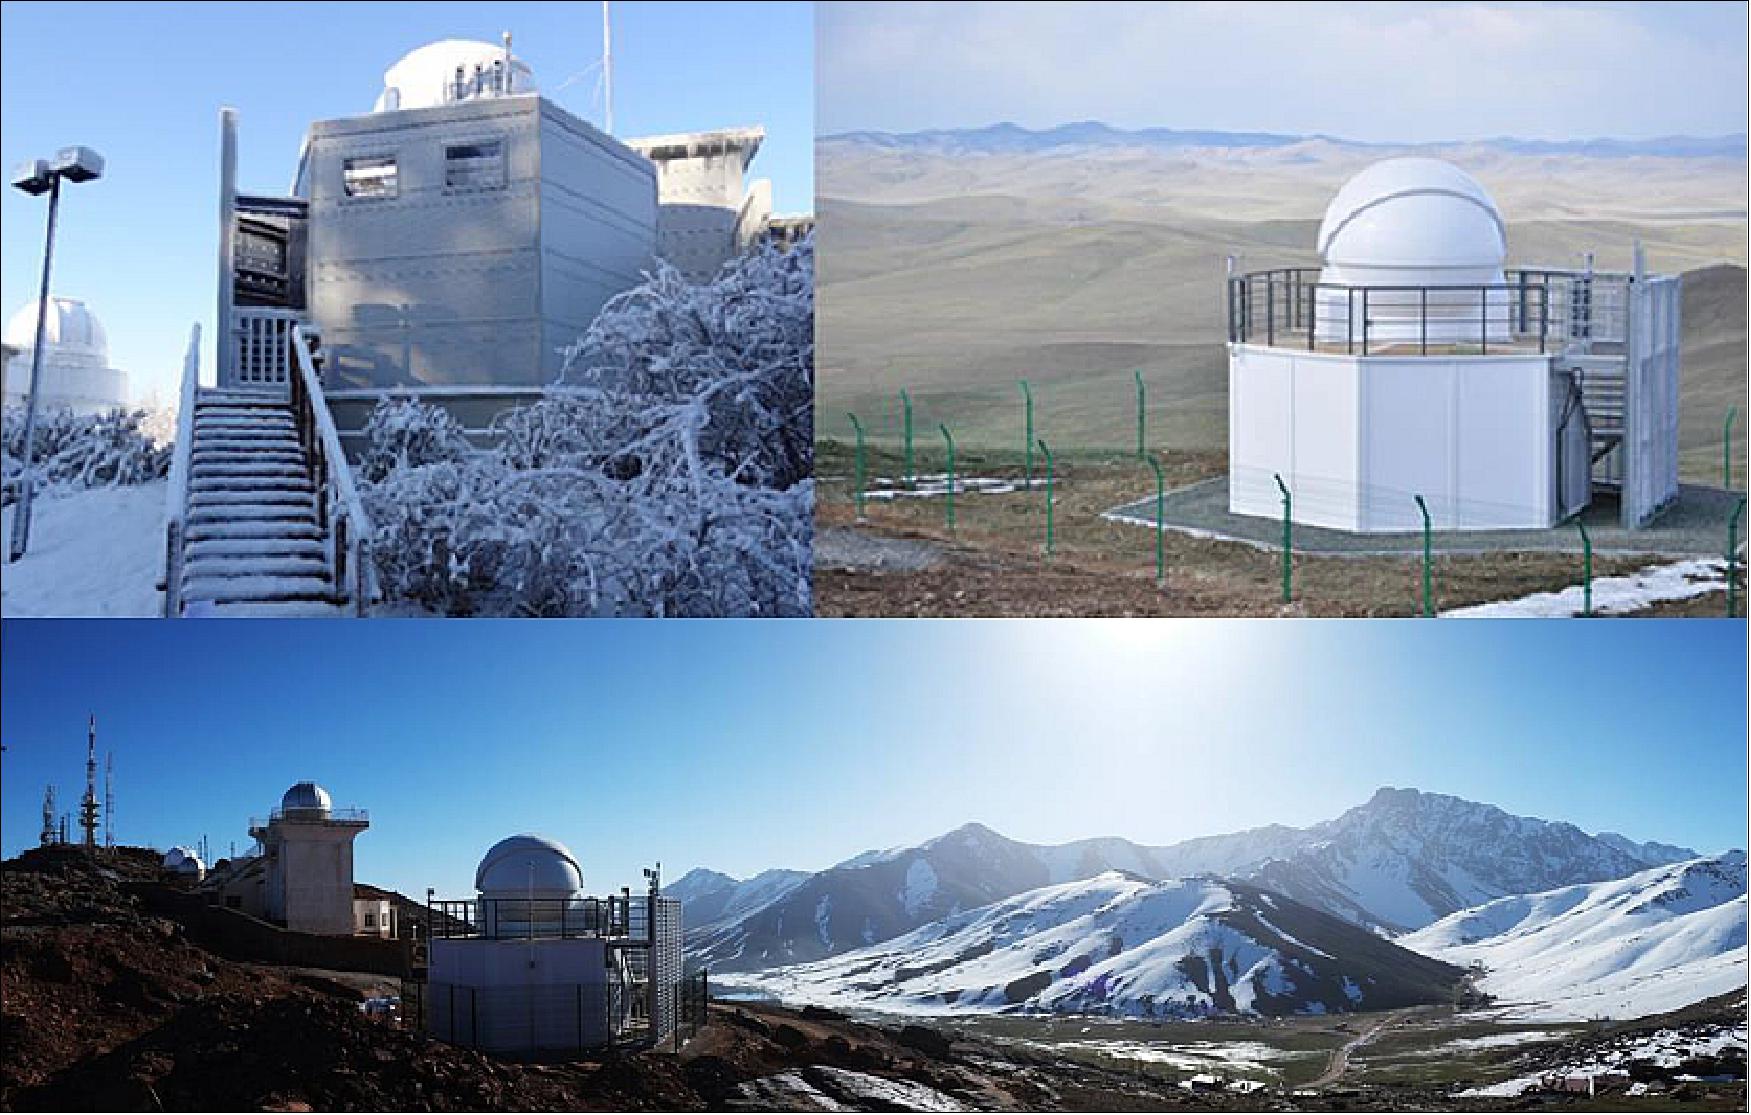 Figure 32: Upper left: OWL test-bed in Daejeon, Korea; upper right: OWL-NET observatory in Songino, Mongolia; bottom: OWL-NET observatory in Oukaimeden, Morocco (image credit: KASI)